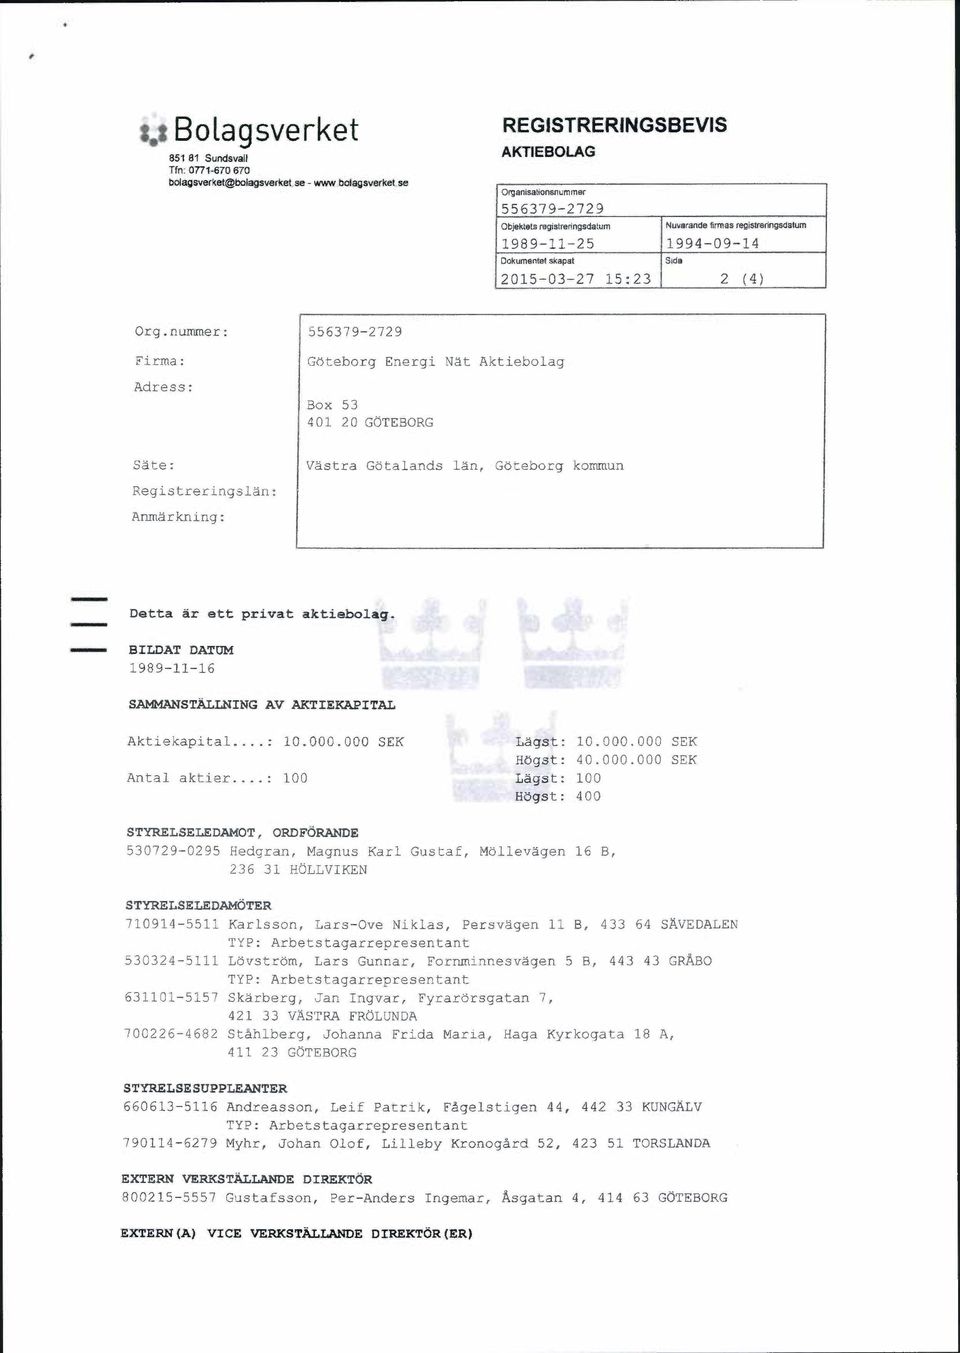 regisveringstlatum 1989-11-25 1994-09-14 Dokumentet skapat Side 2015-Q3-27 15:23 2 (4) Org.